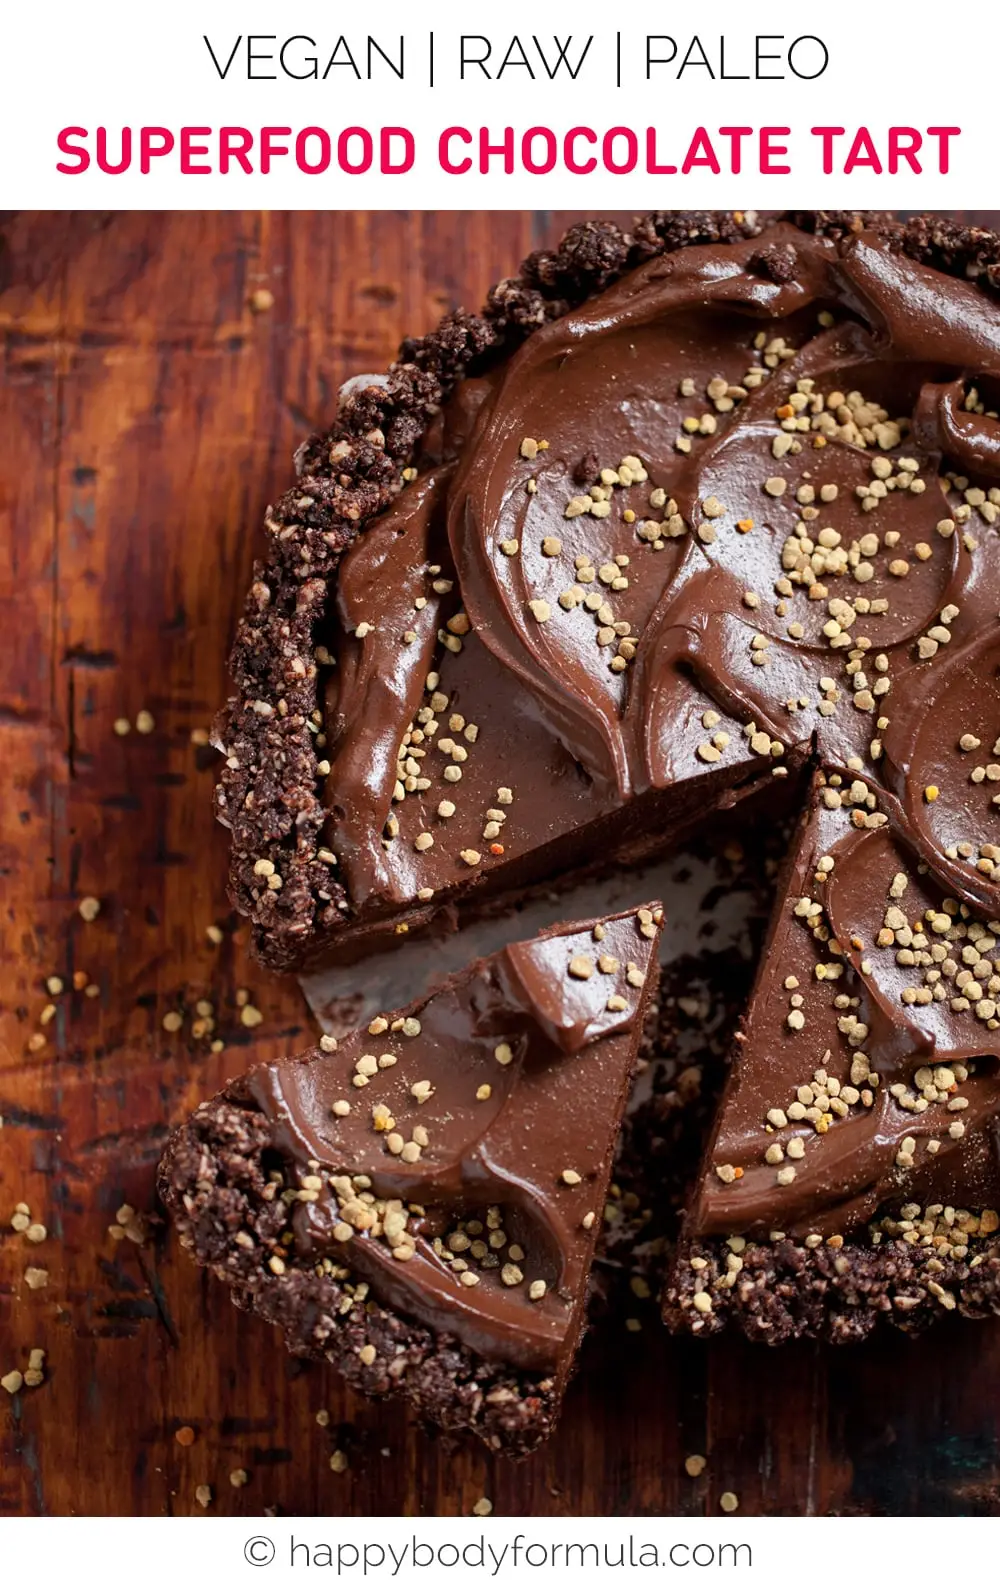 Superfood Chocolate Tart - Raw, Vegan, Paleo Friendly. Recipe by Teresa Cutter